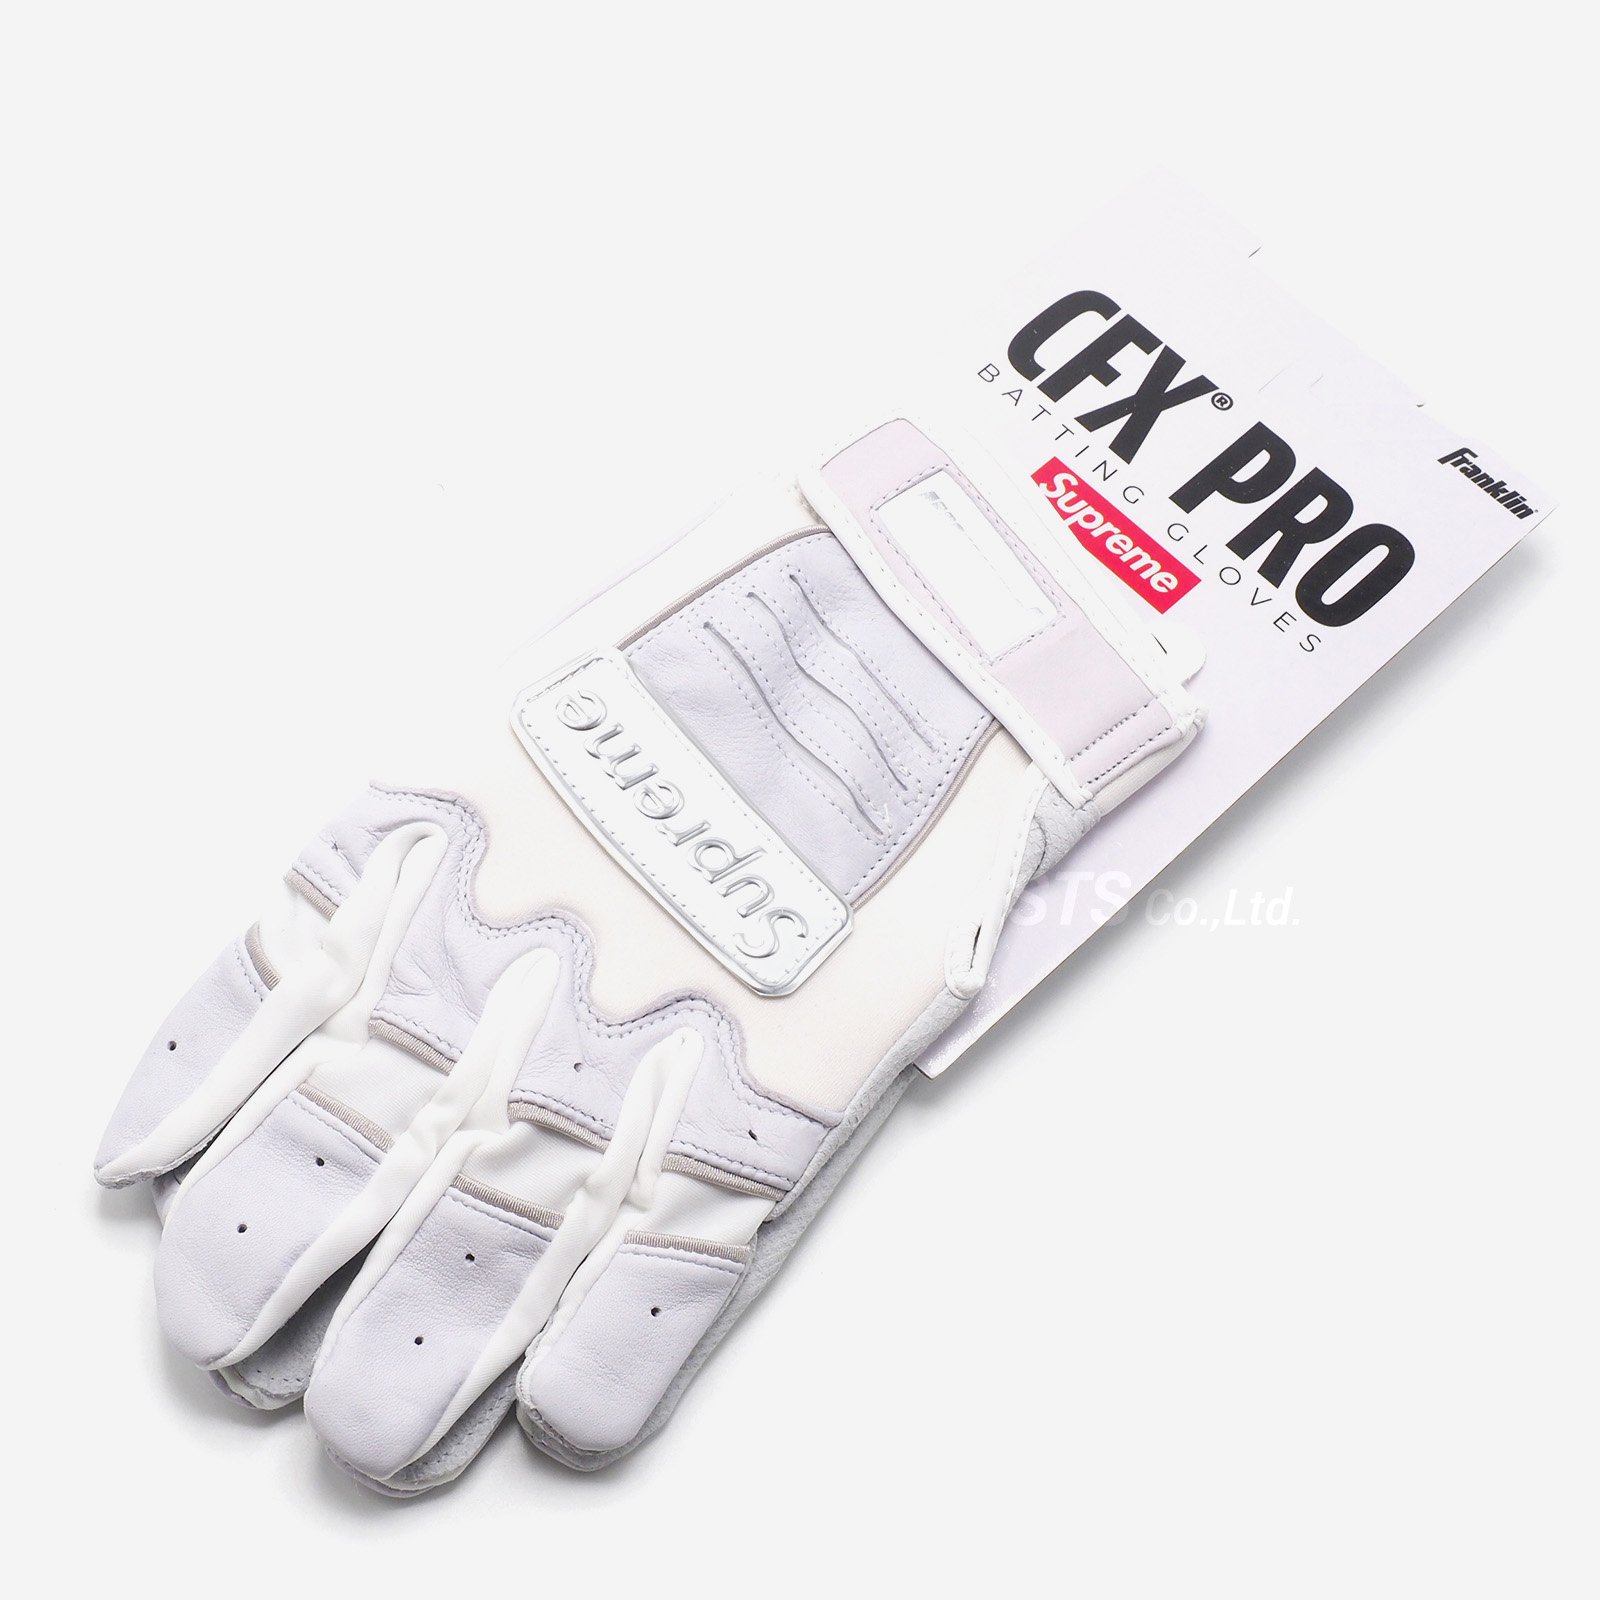 Supreme/Franklin CFX Pro Batting Glove - UG.SHAFT